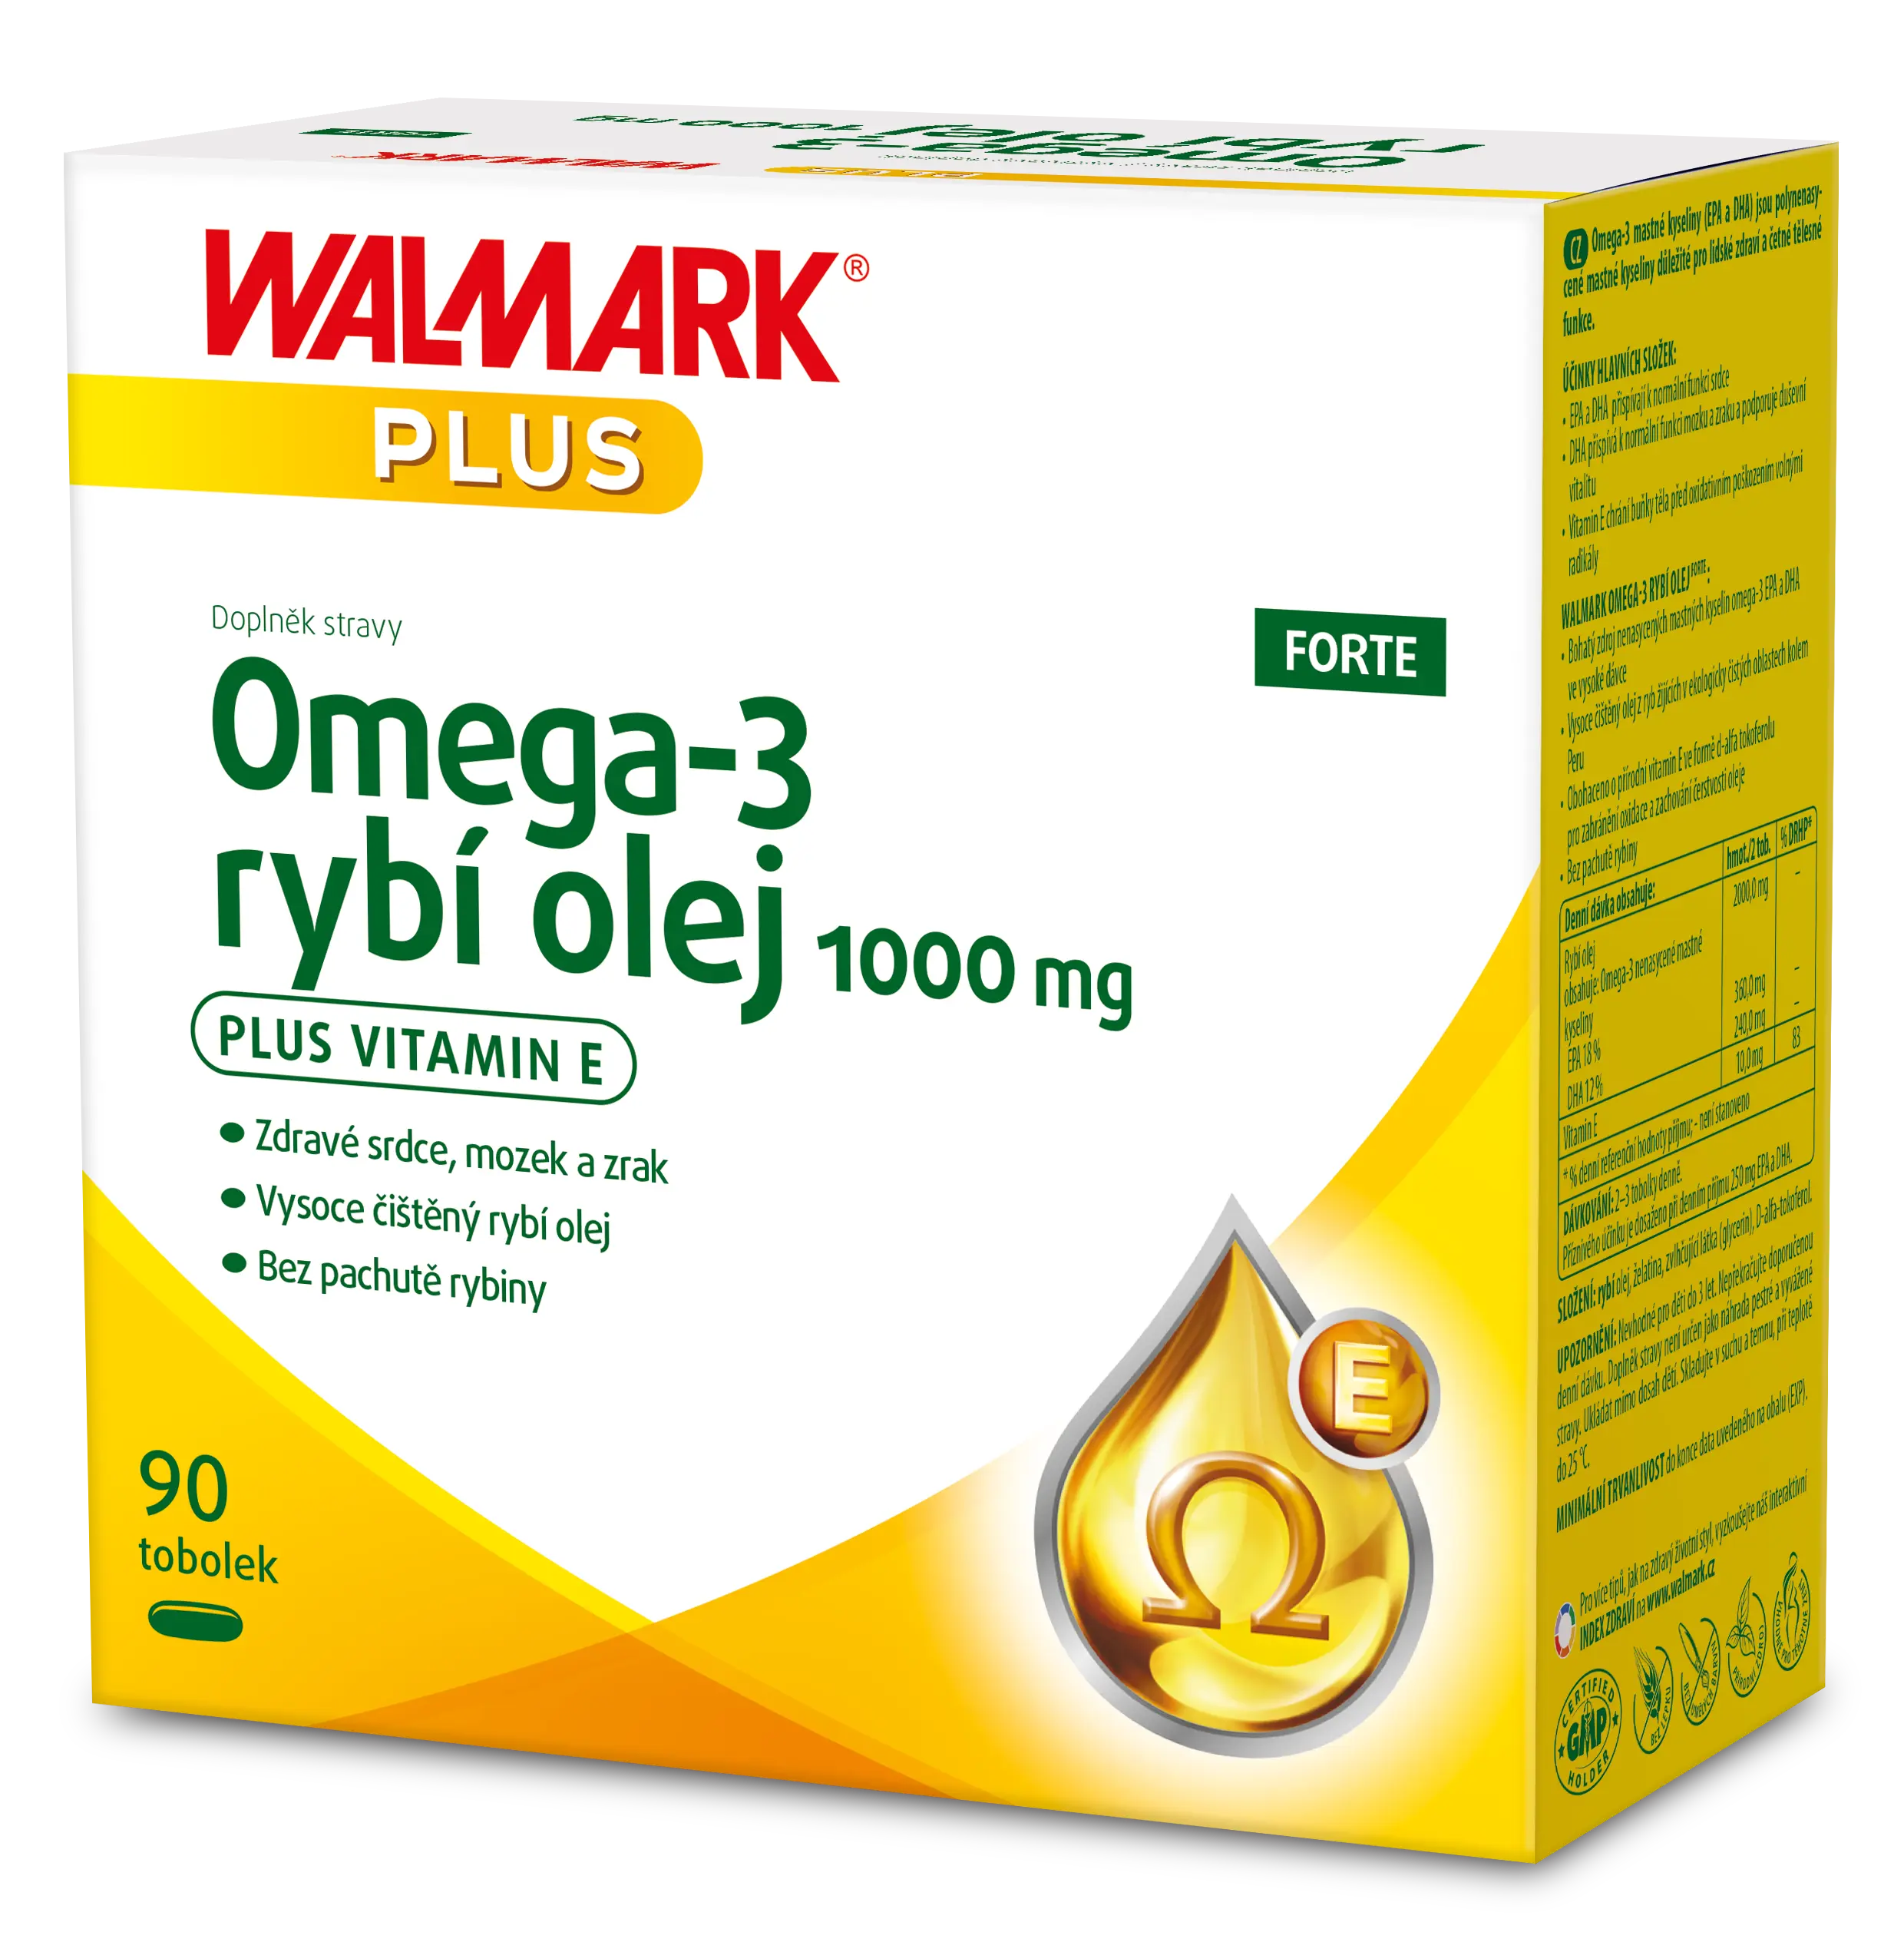 Walmark Omega 3 rybí olej 1000 mg 90 tablet